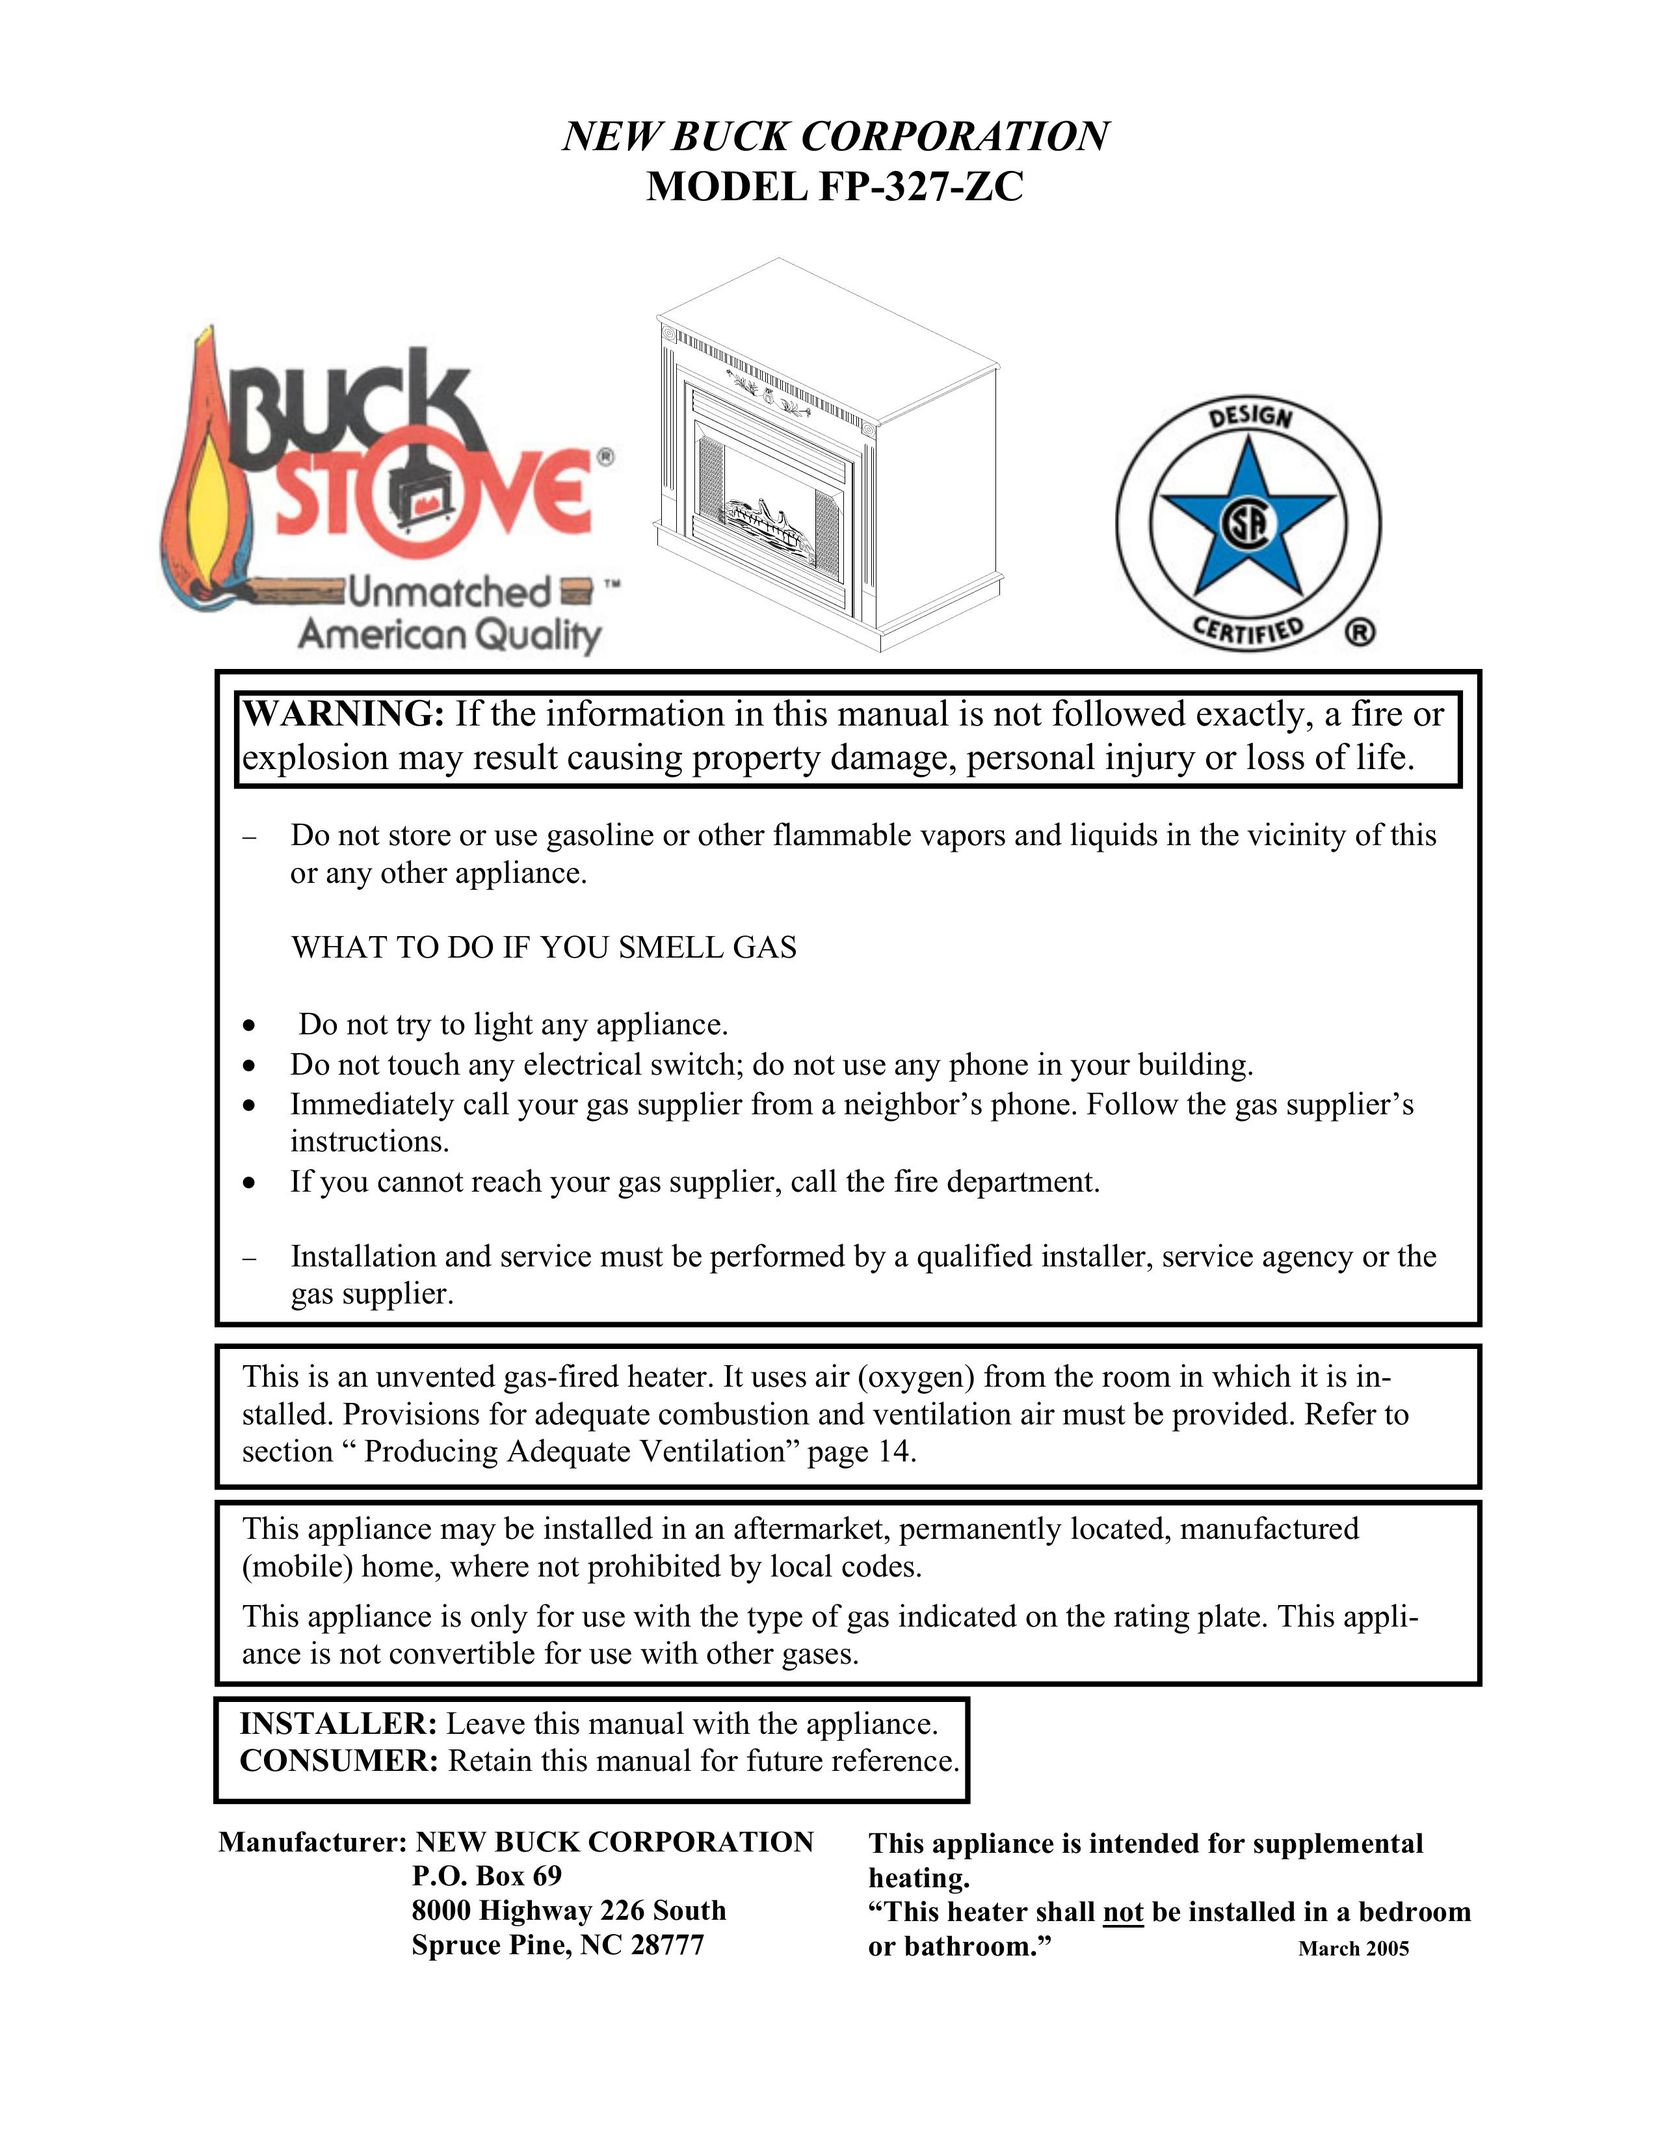 New Buck Corporation MODEL FP-327-ZC Indoor Fireplace User Manual